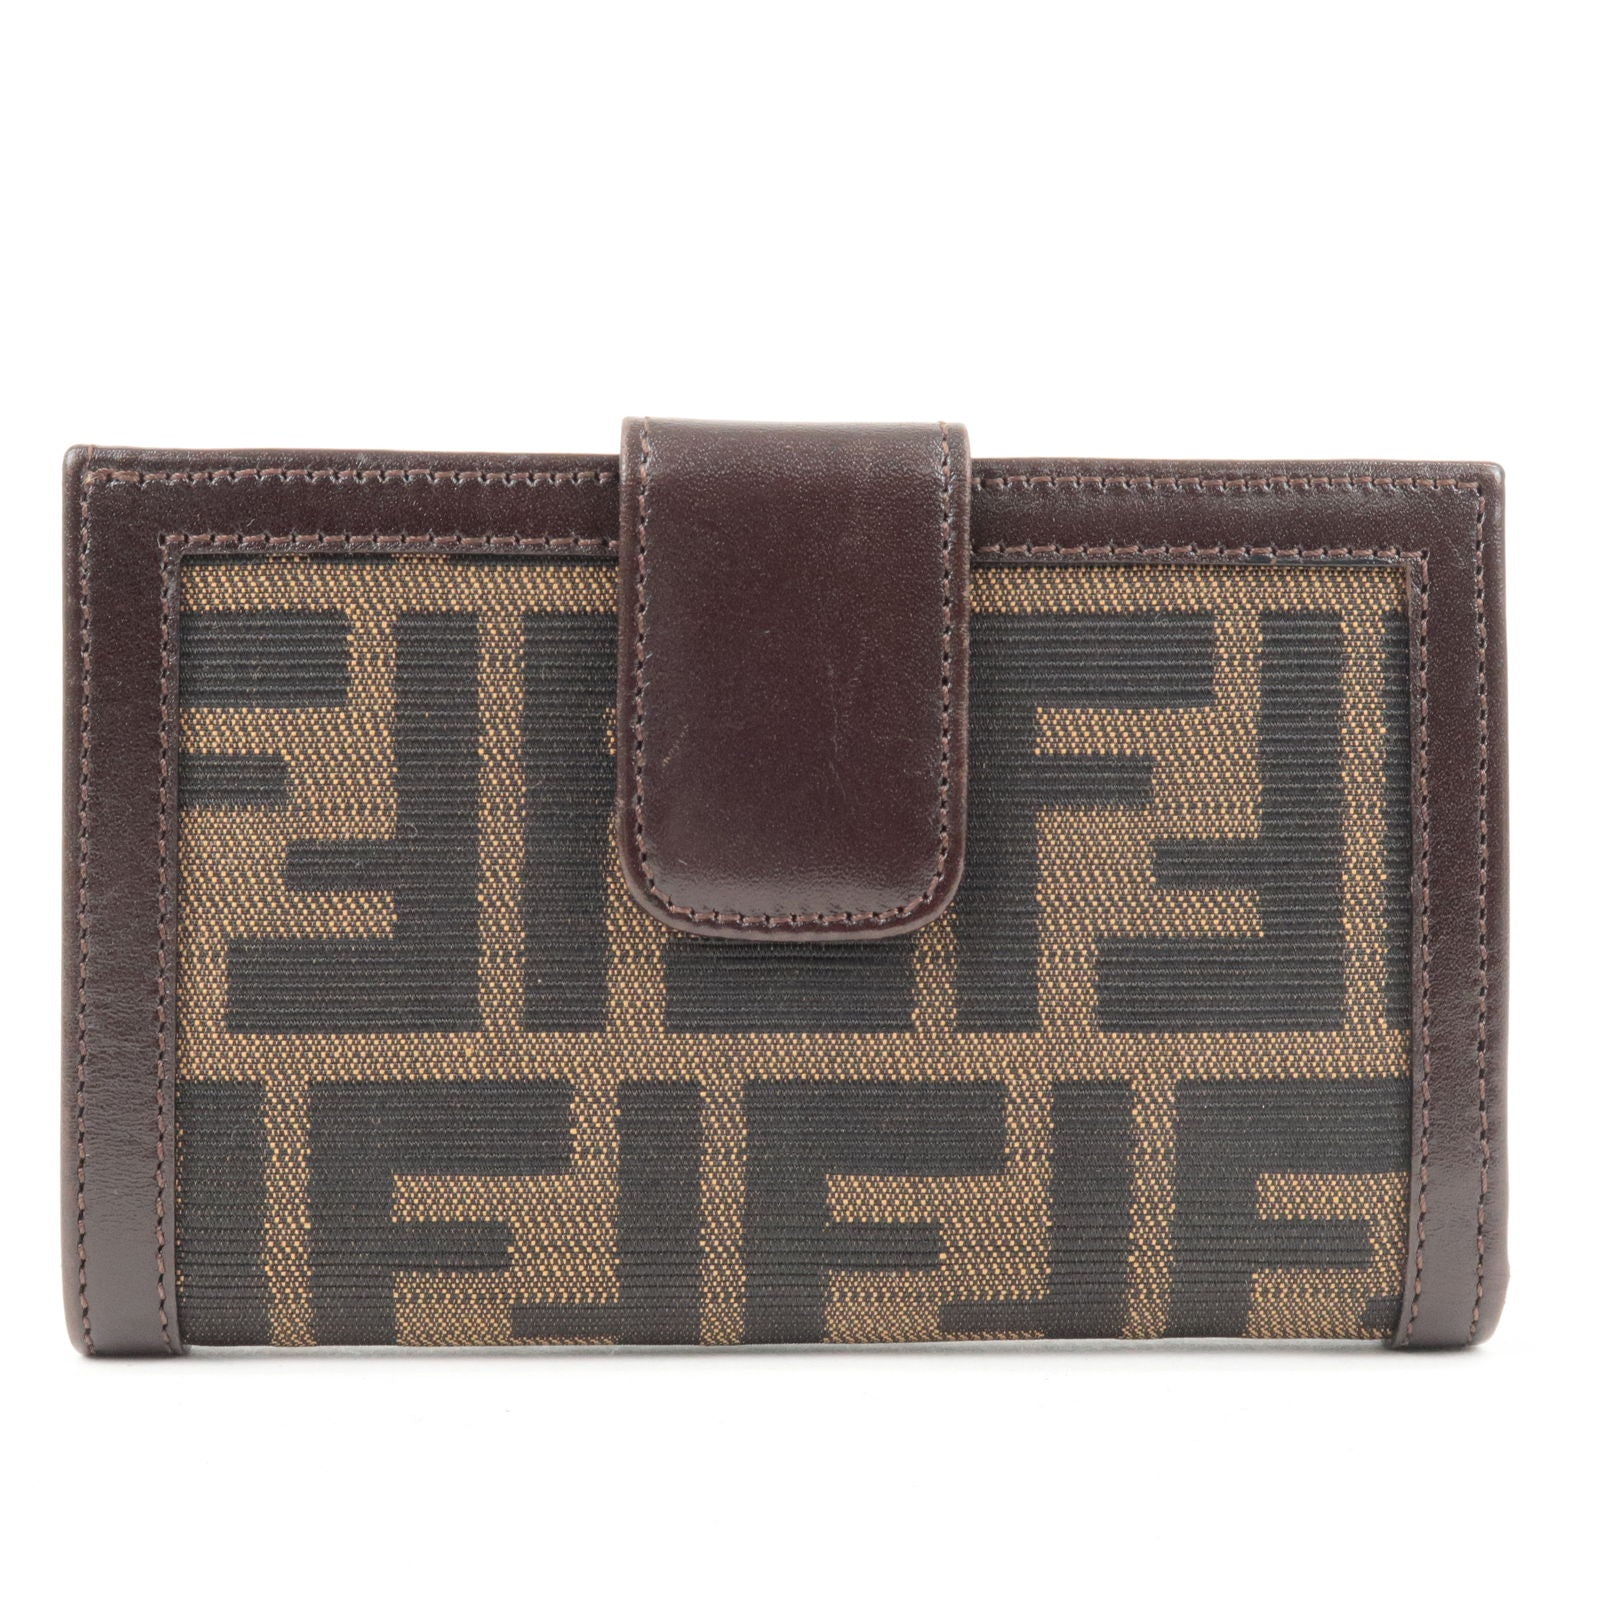 FENDI-Zucca-Canvas-Leather-Bi-Fold-Small-Wallet-Brown-01692